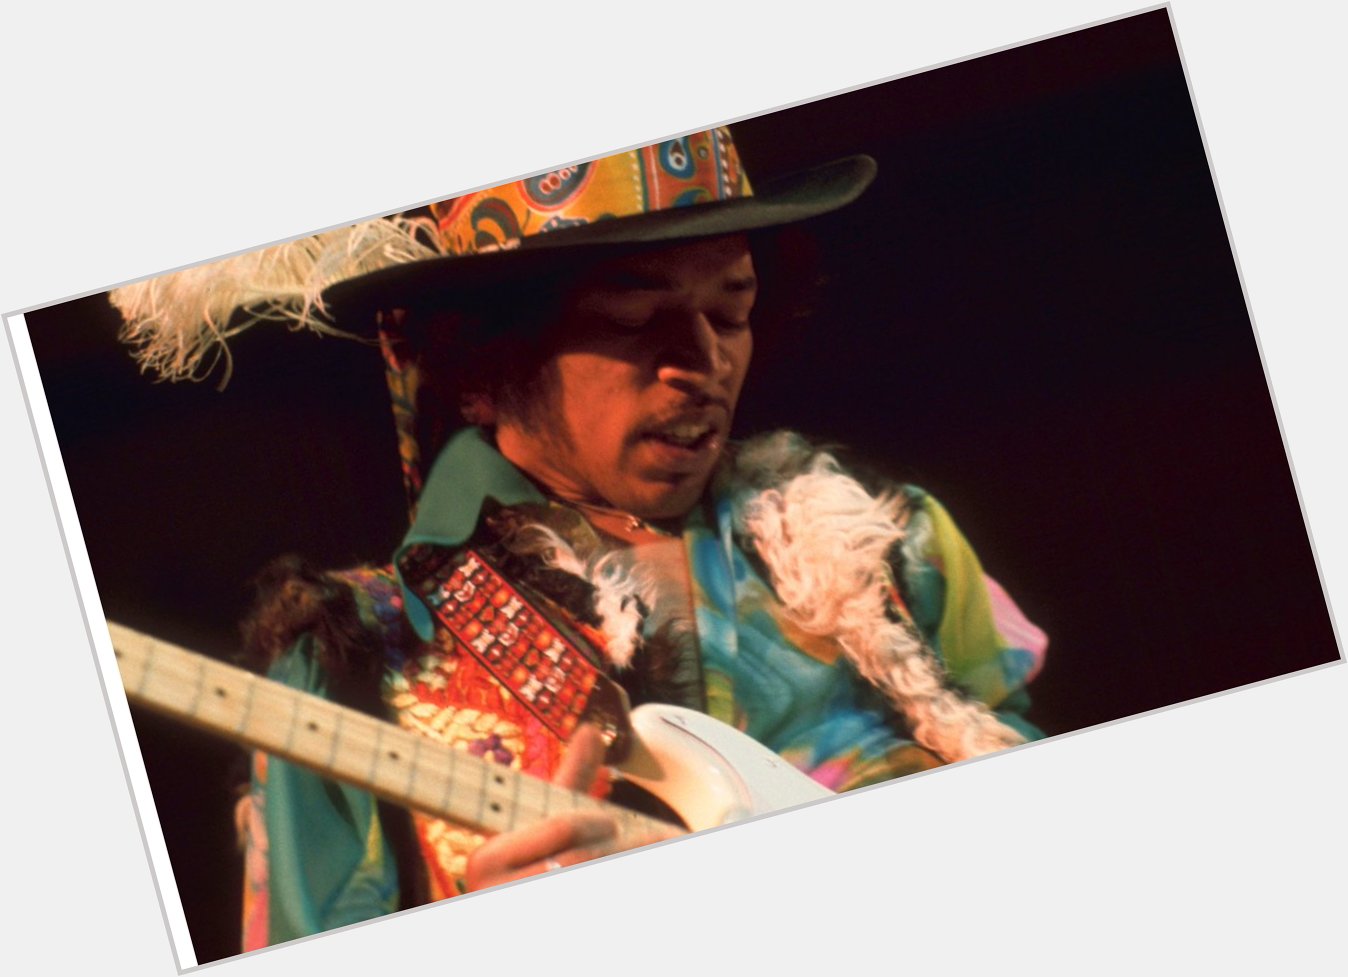 Happy Birthday Jimi Hendrix (1942-1970)! Watch our full documentary on Hendrix here:  